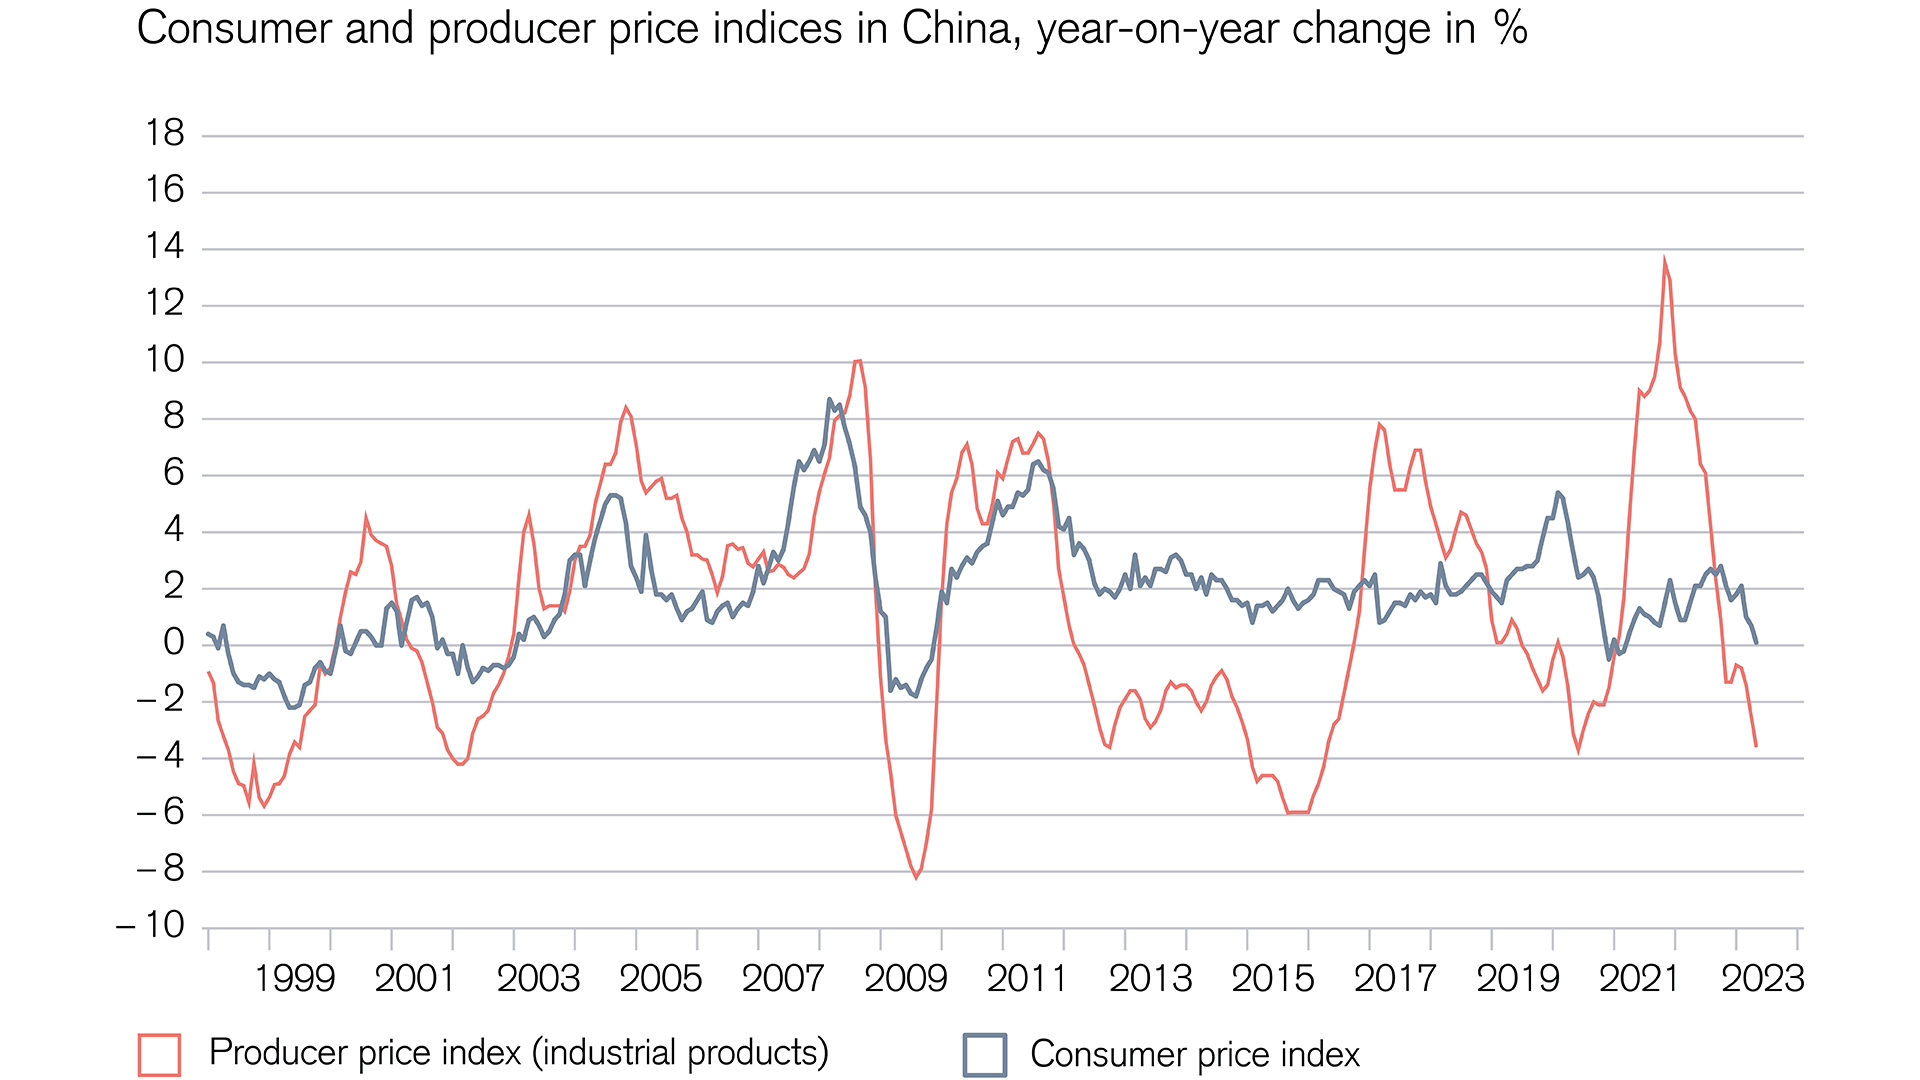 Deflation in China 2023